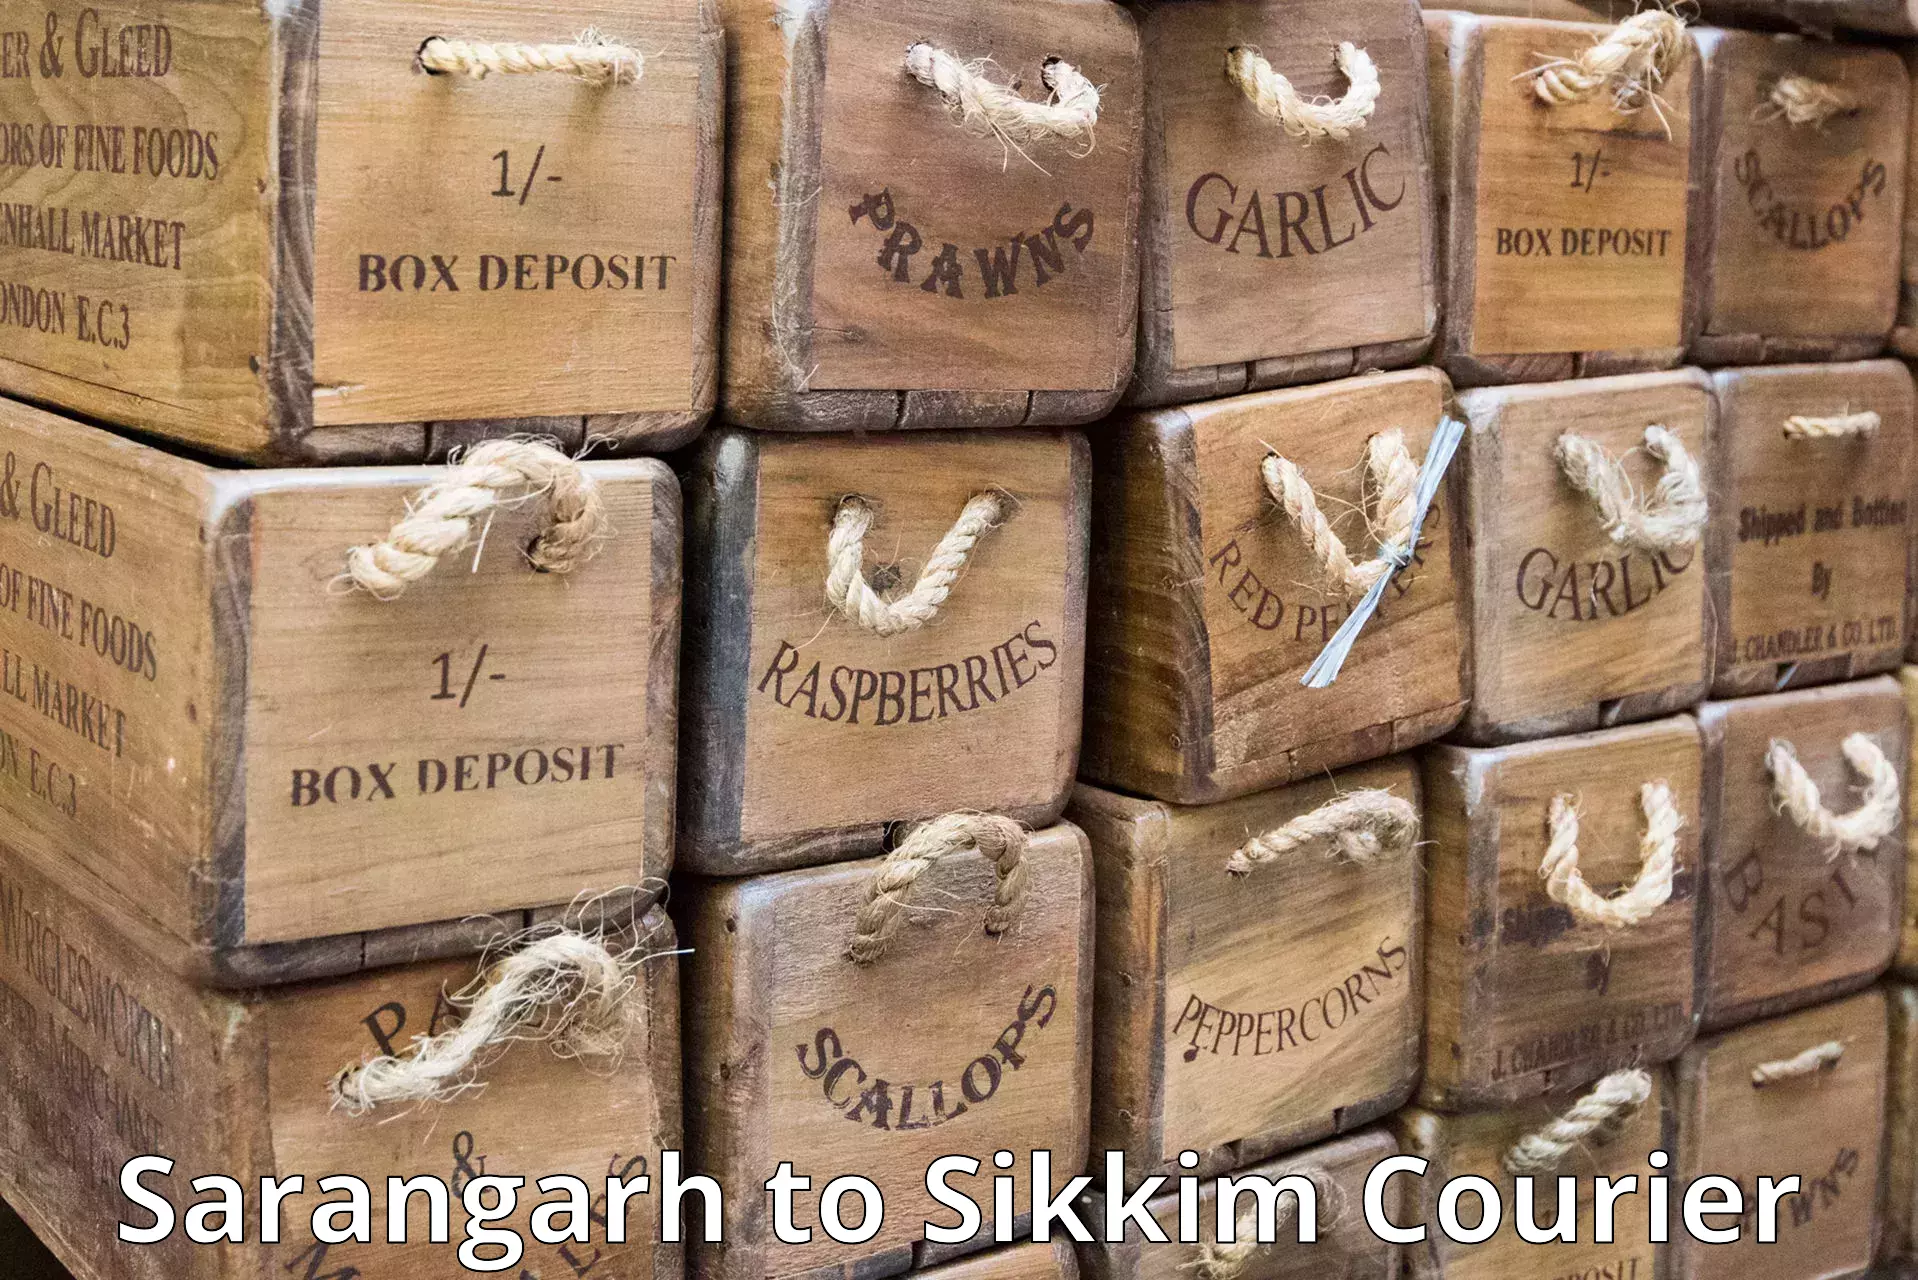 Versatile courier options Sarangarh to Rangpo